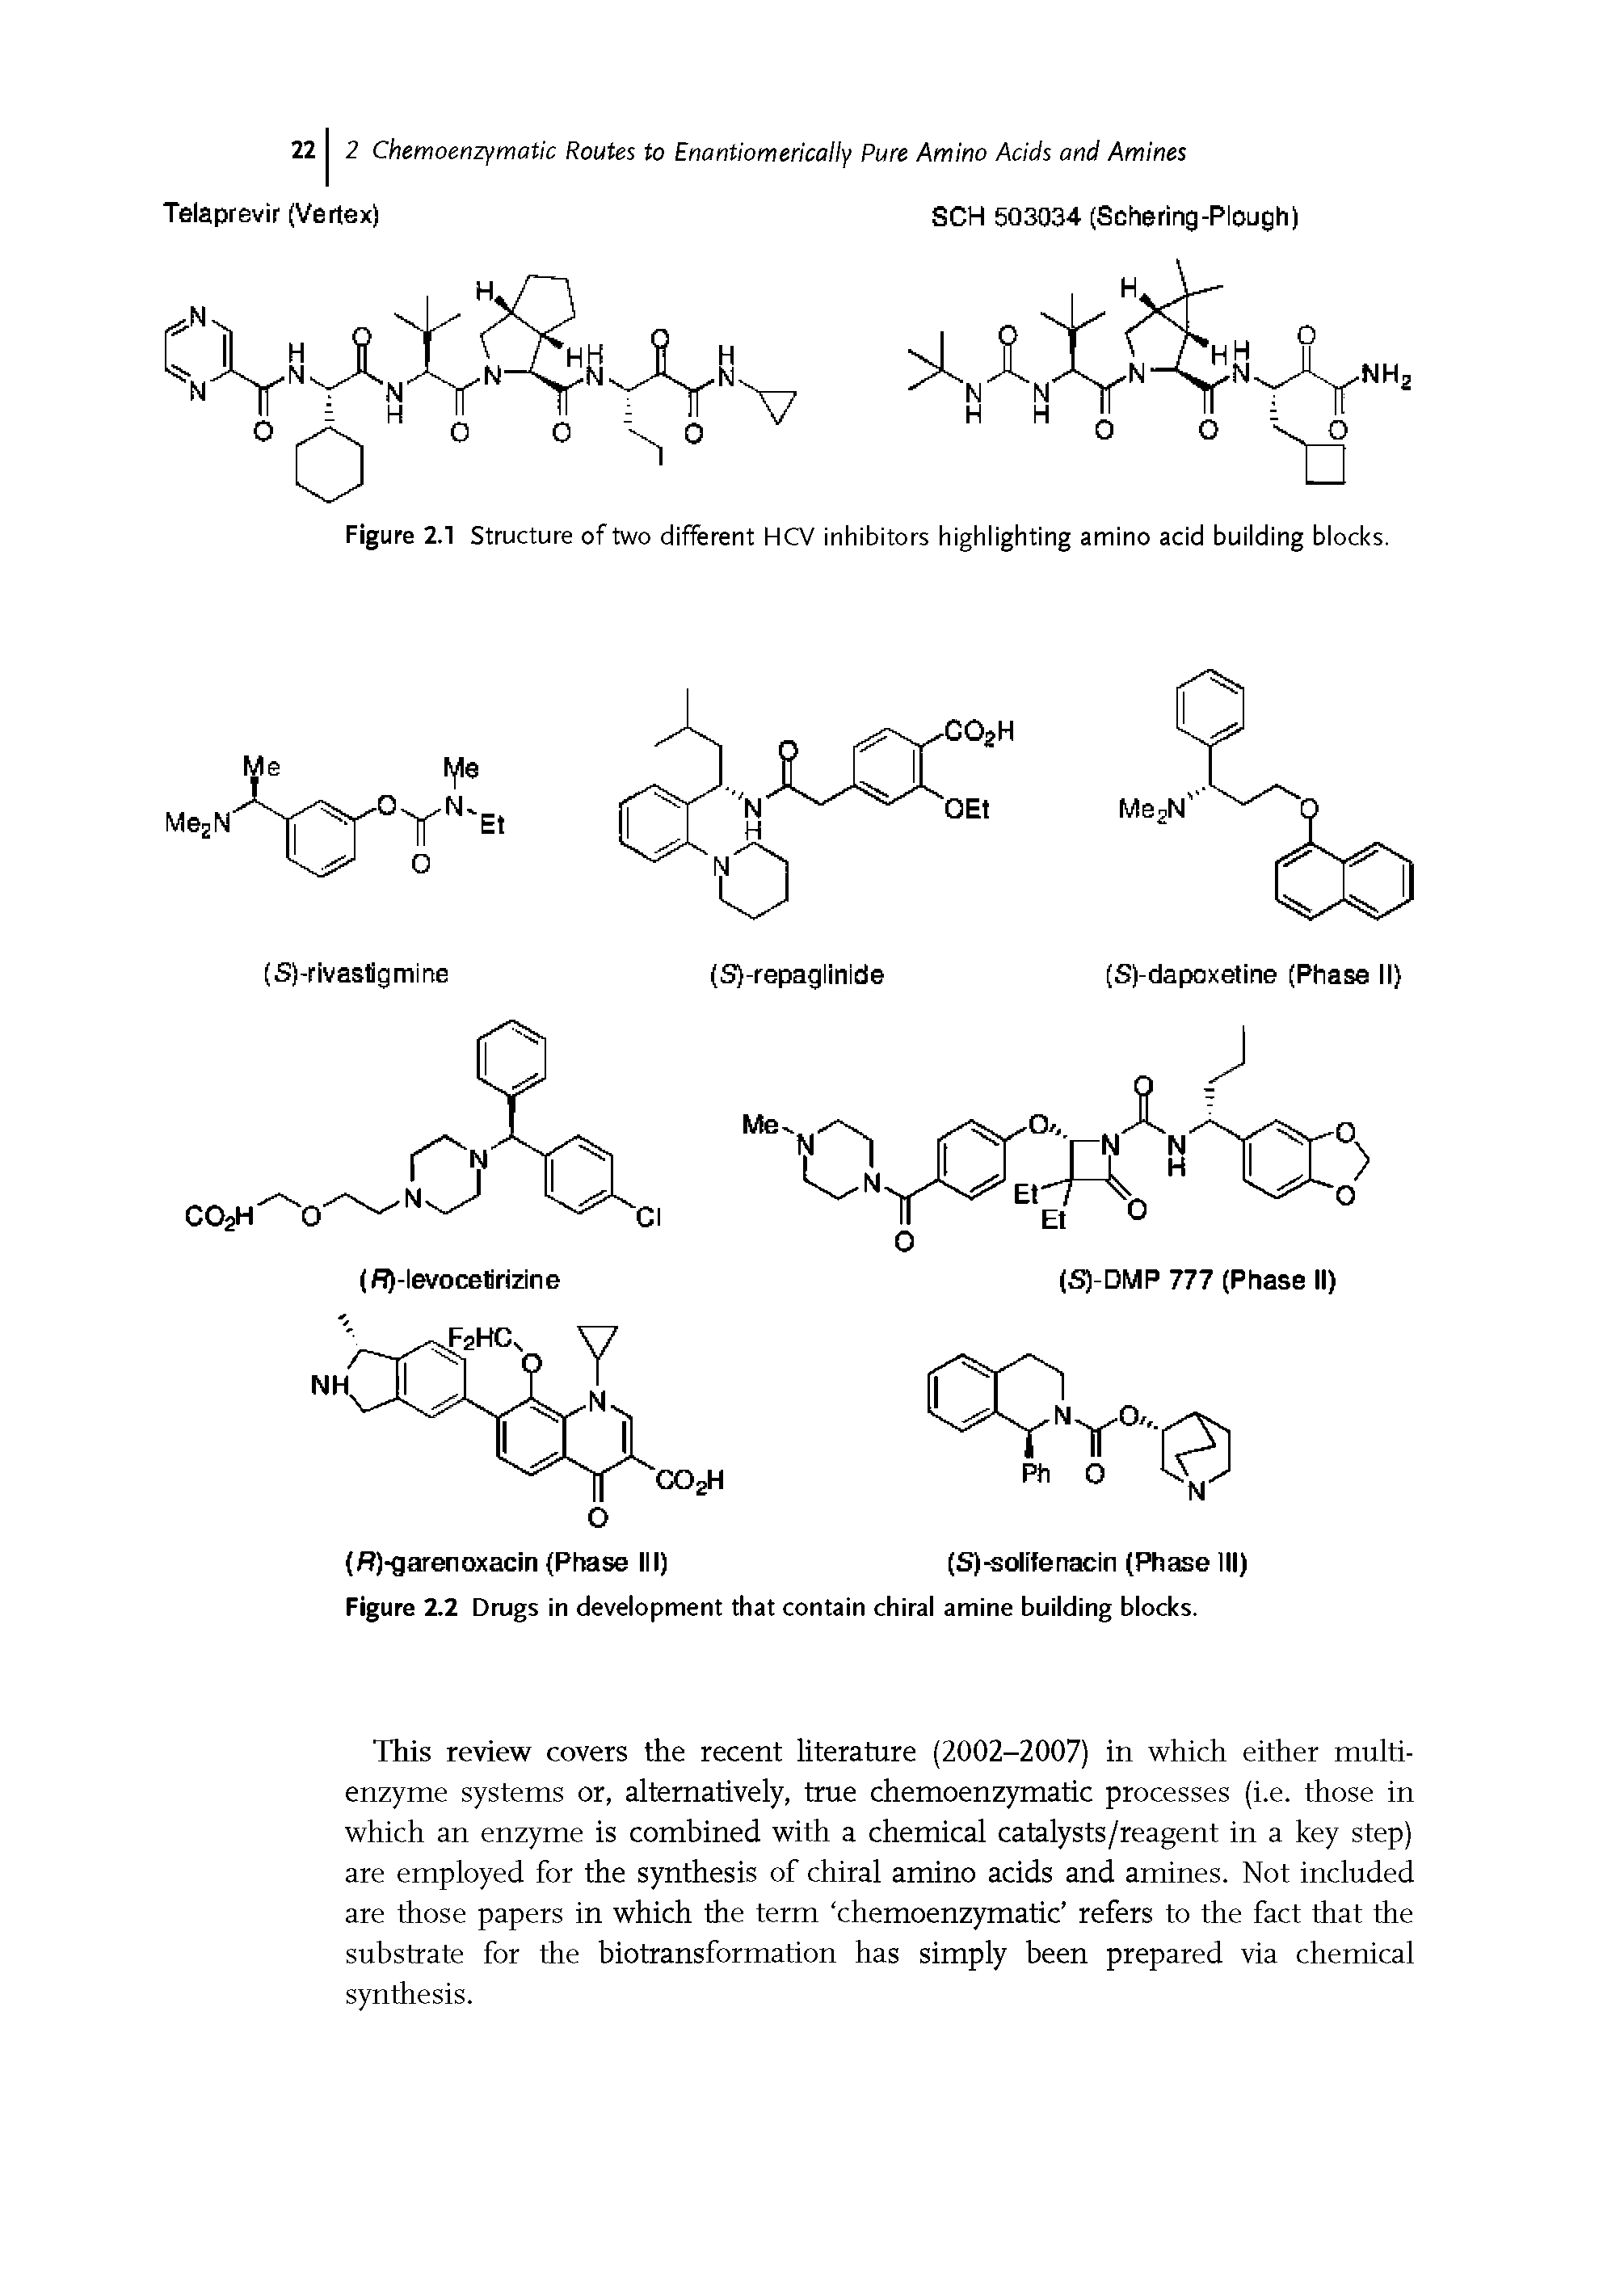 Figure 2.2 Drugs in development that contain chiral amine building blocks.